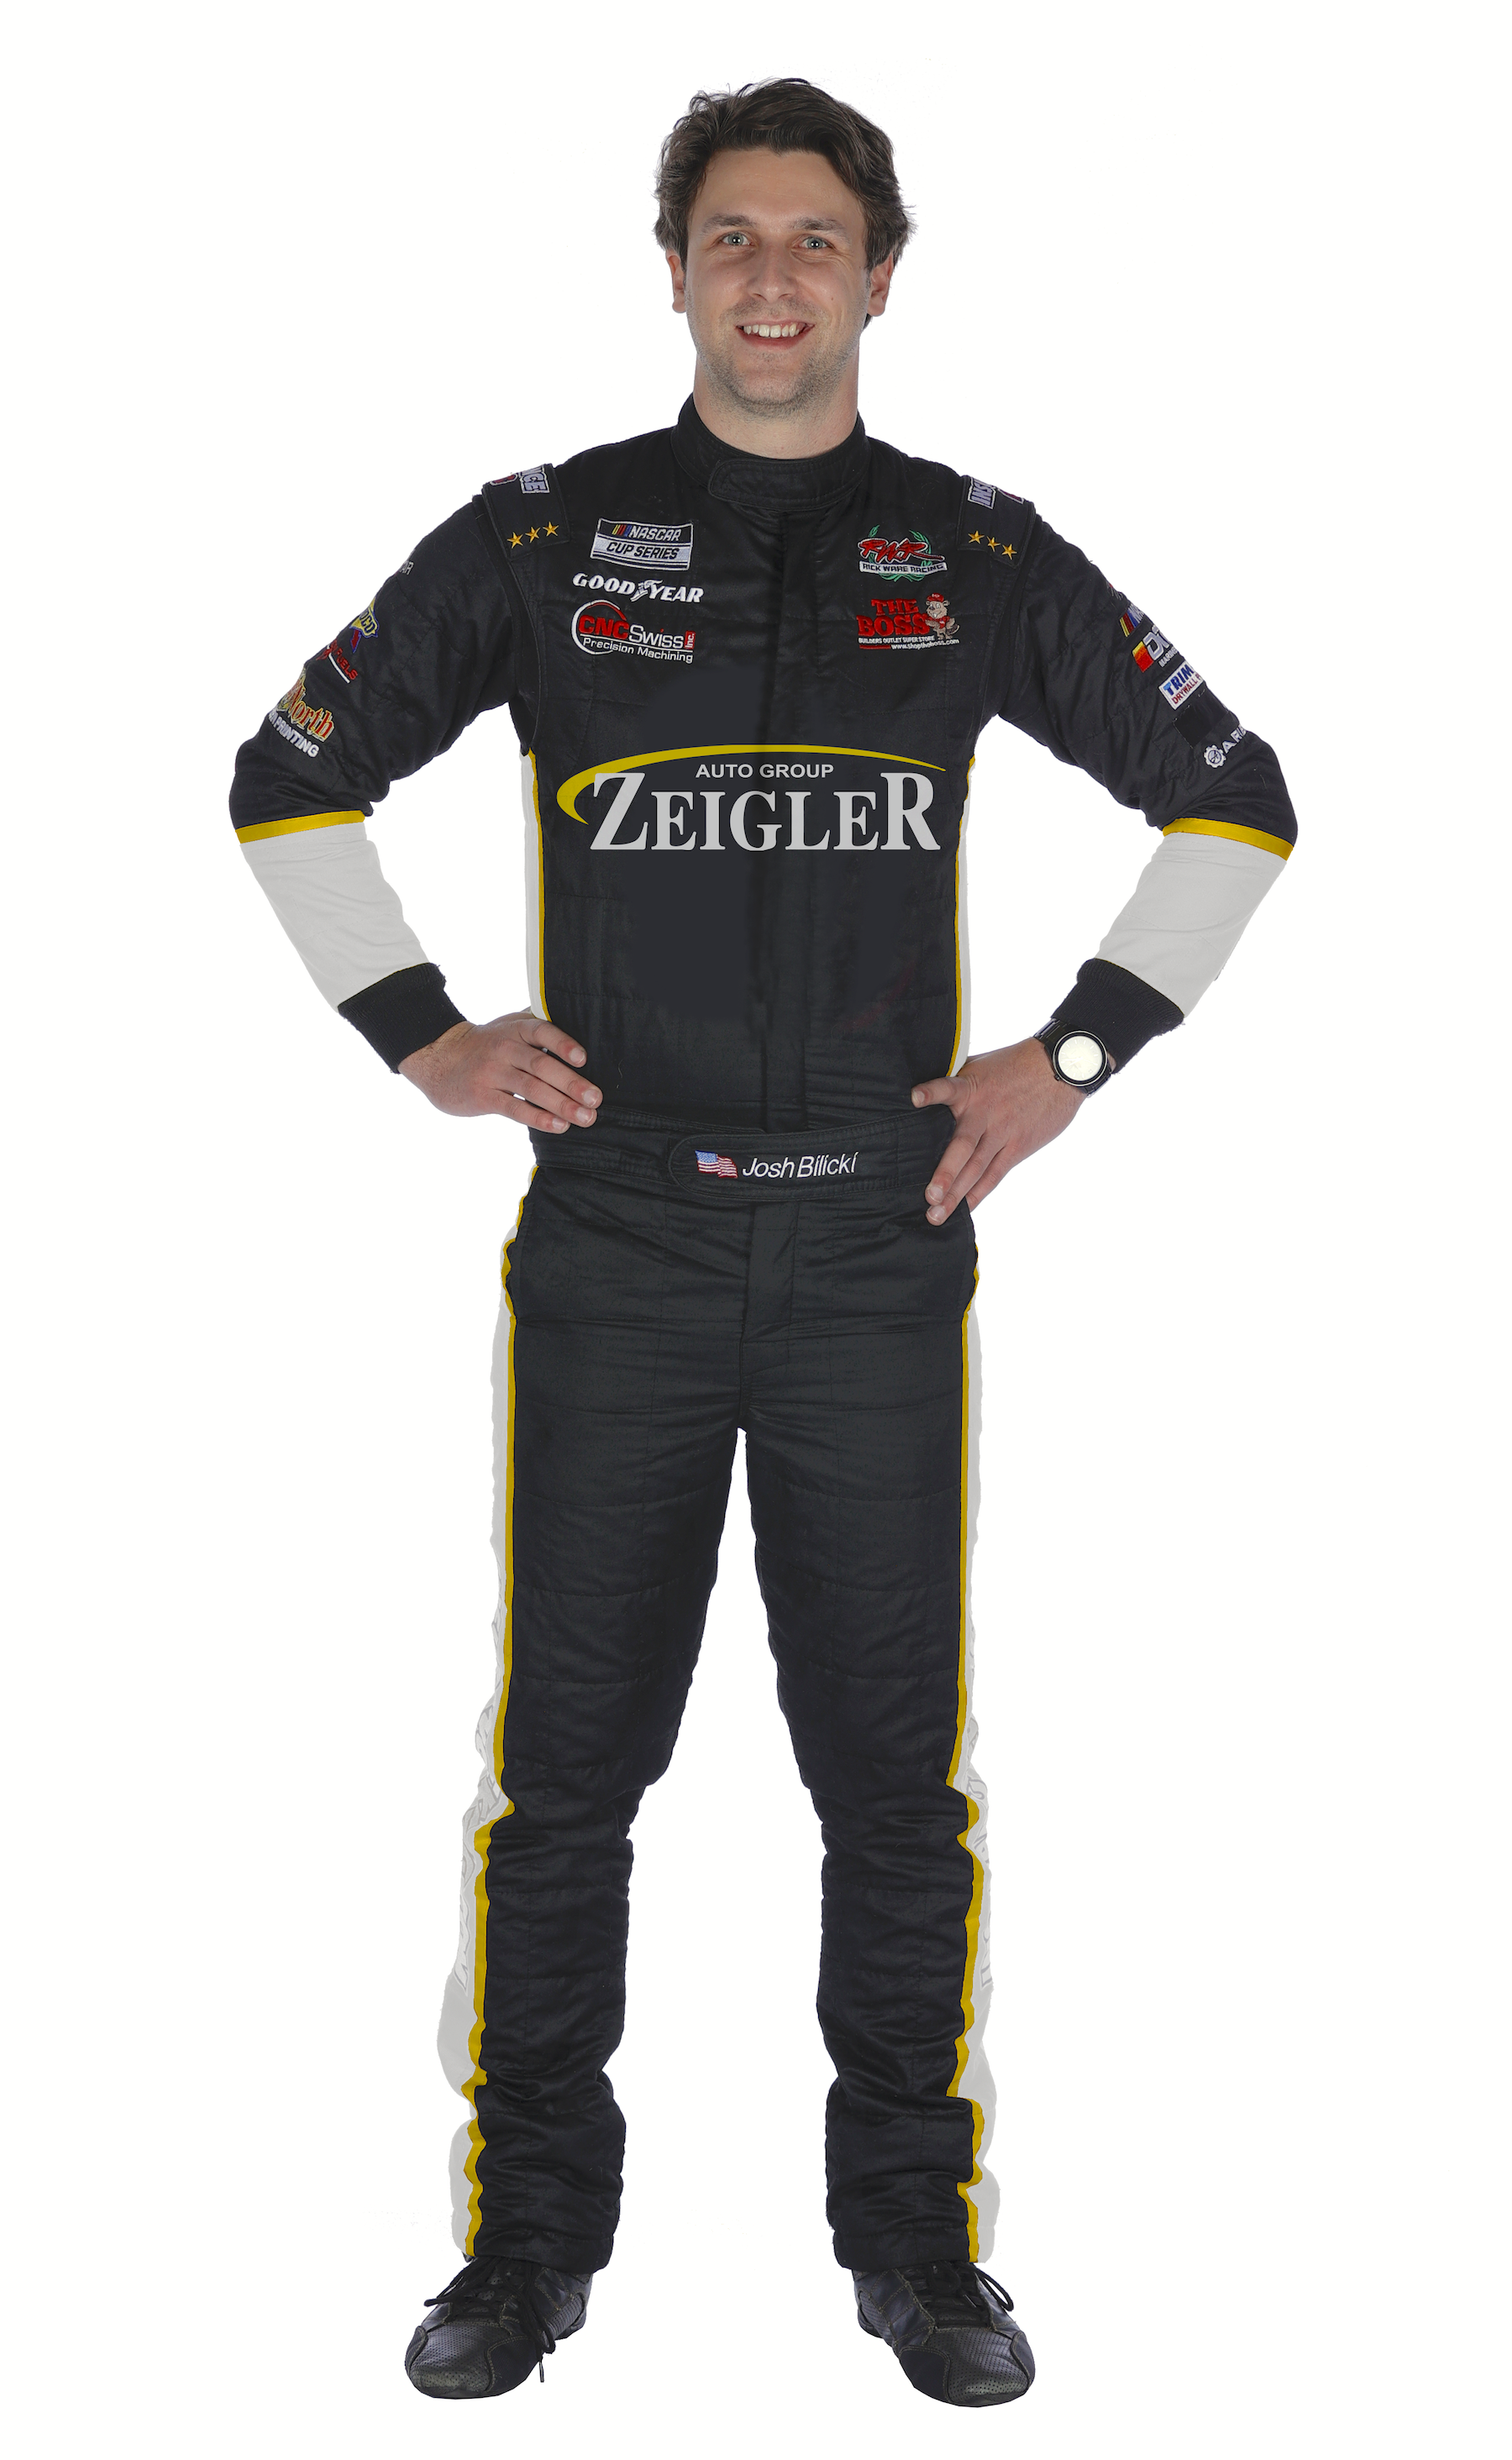 Zeigler Auto Group sponsors Josh Bilicki for NASCAR Cup Series at Michigan International Speedway